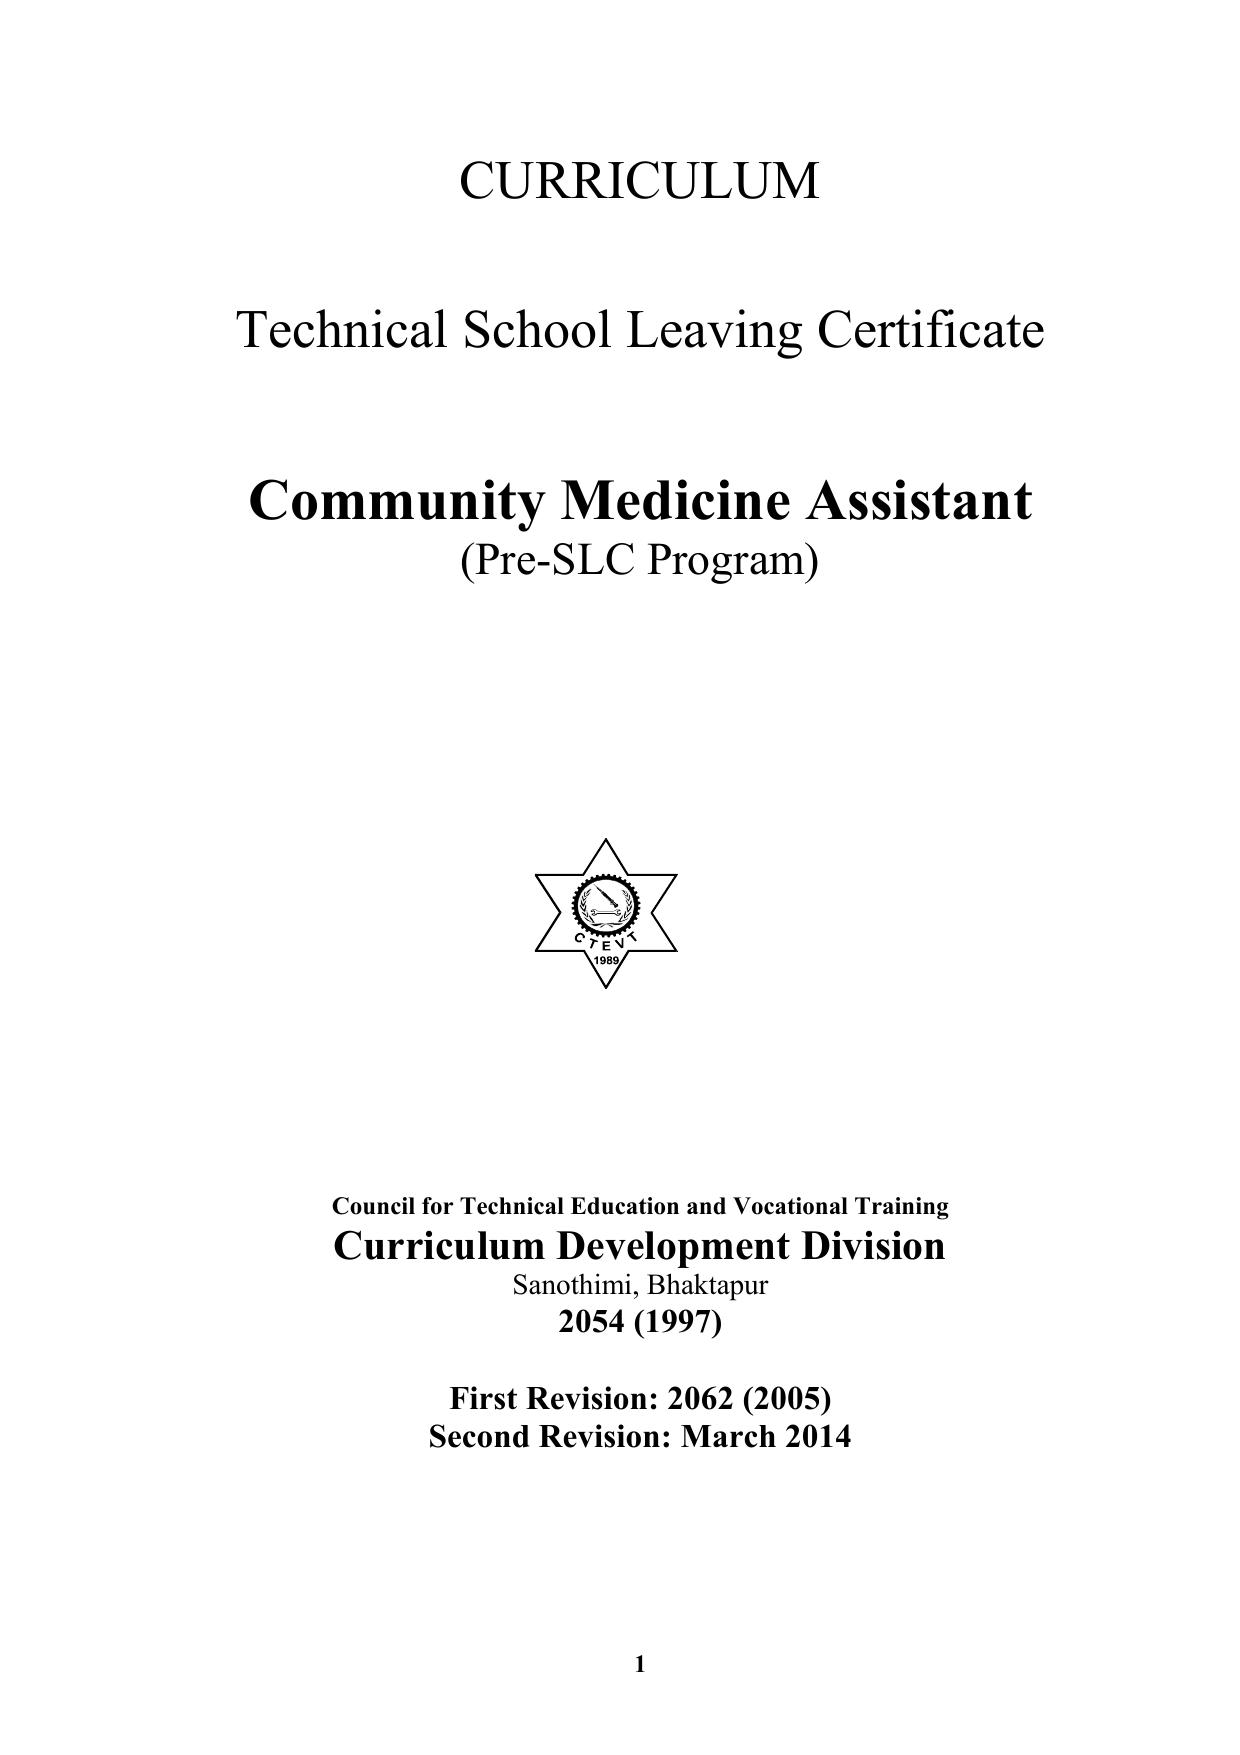 Community Medicine Assistant (CMA) Pre SLC, 2015